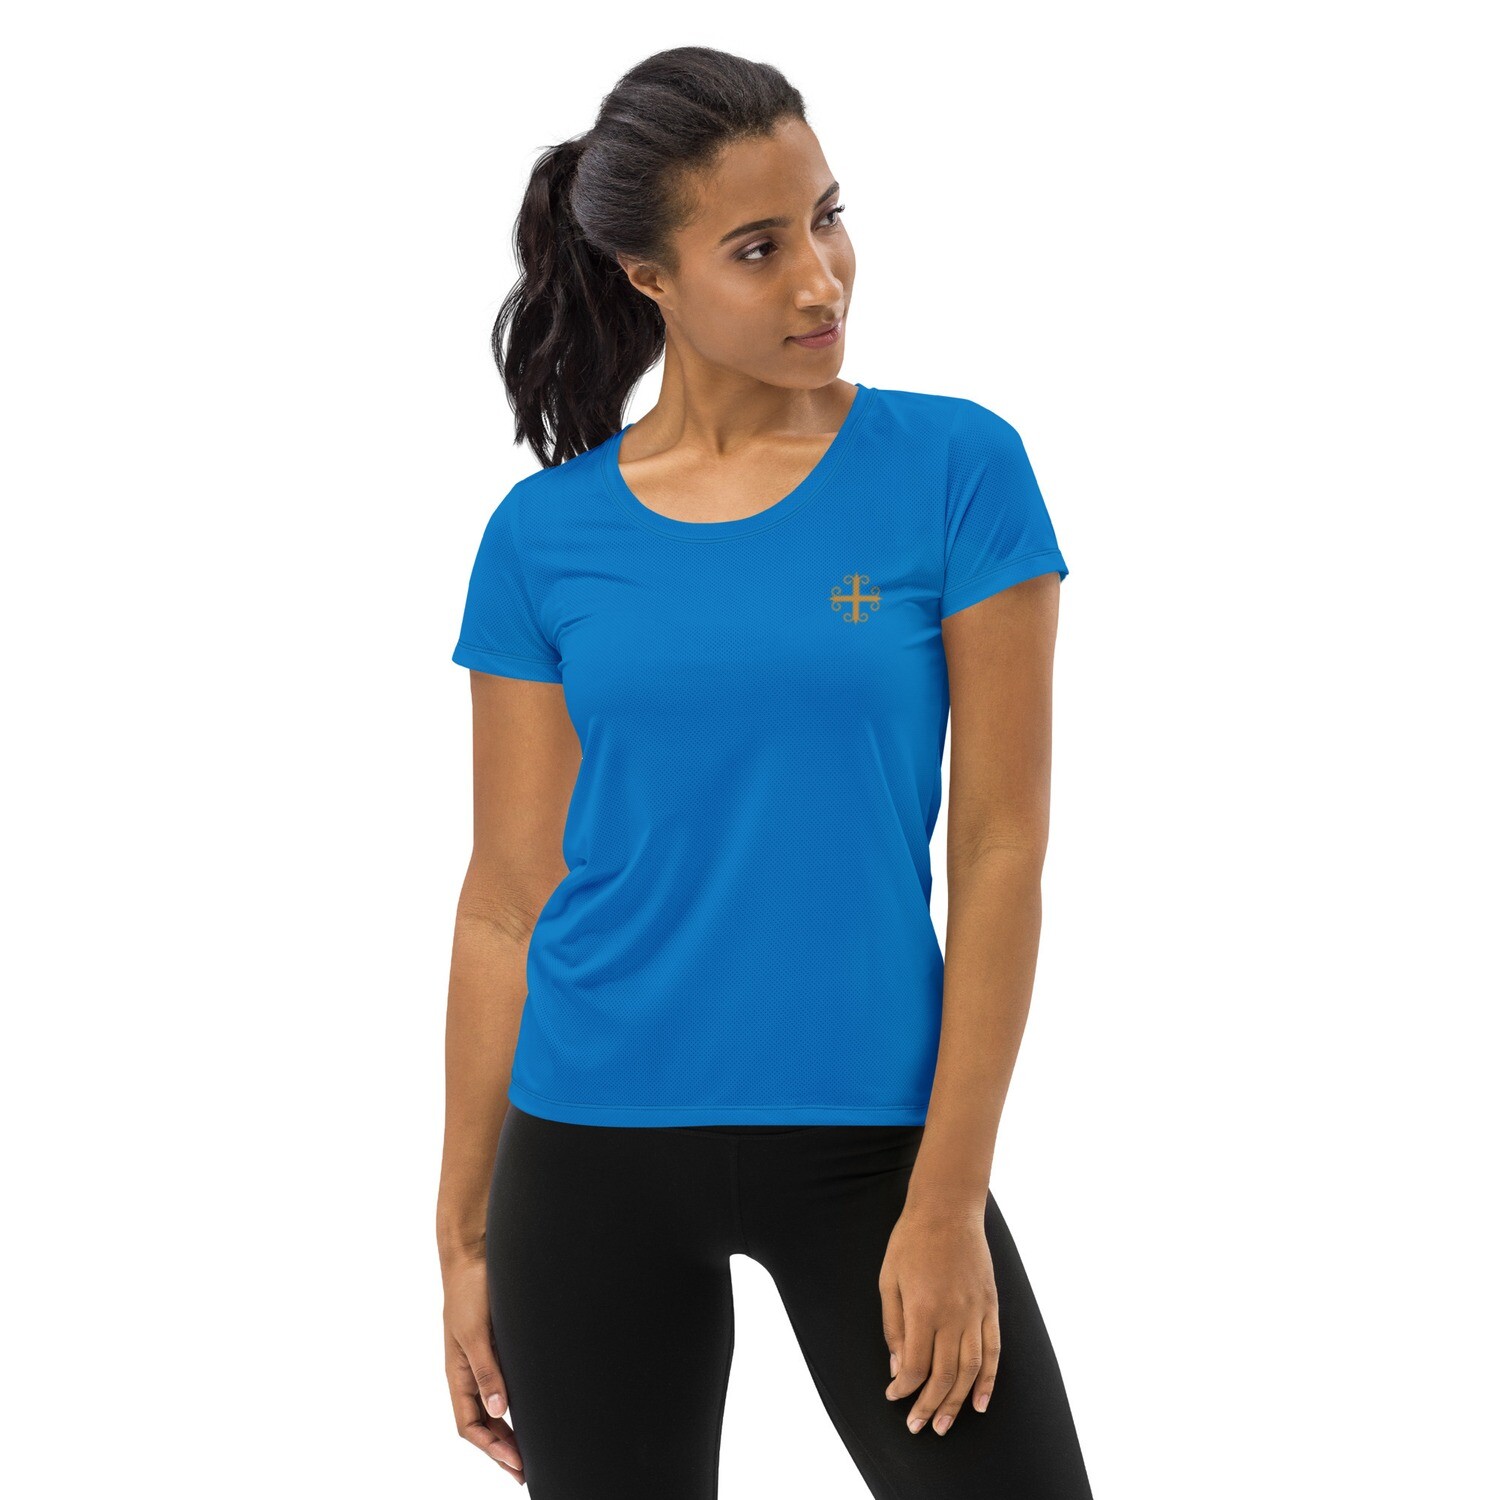 Women's Athletic T-shirt Navy Blue